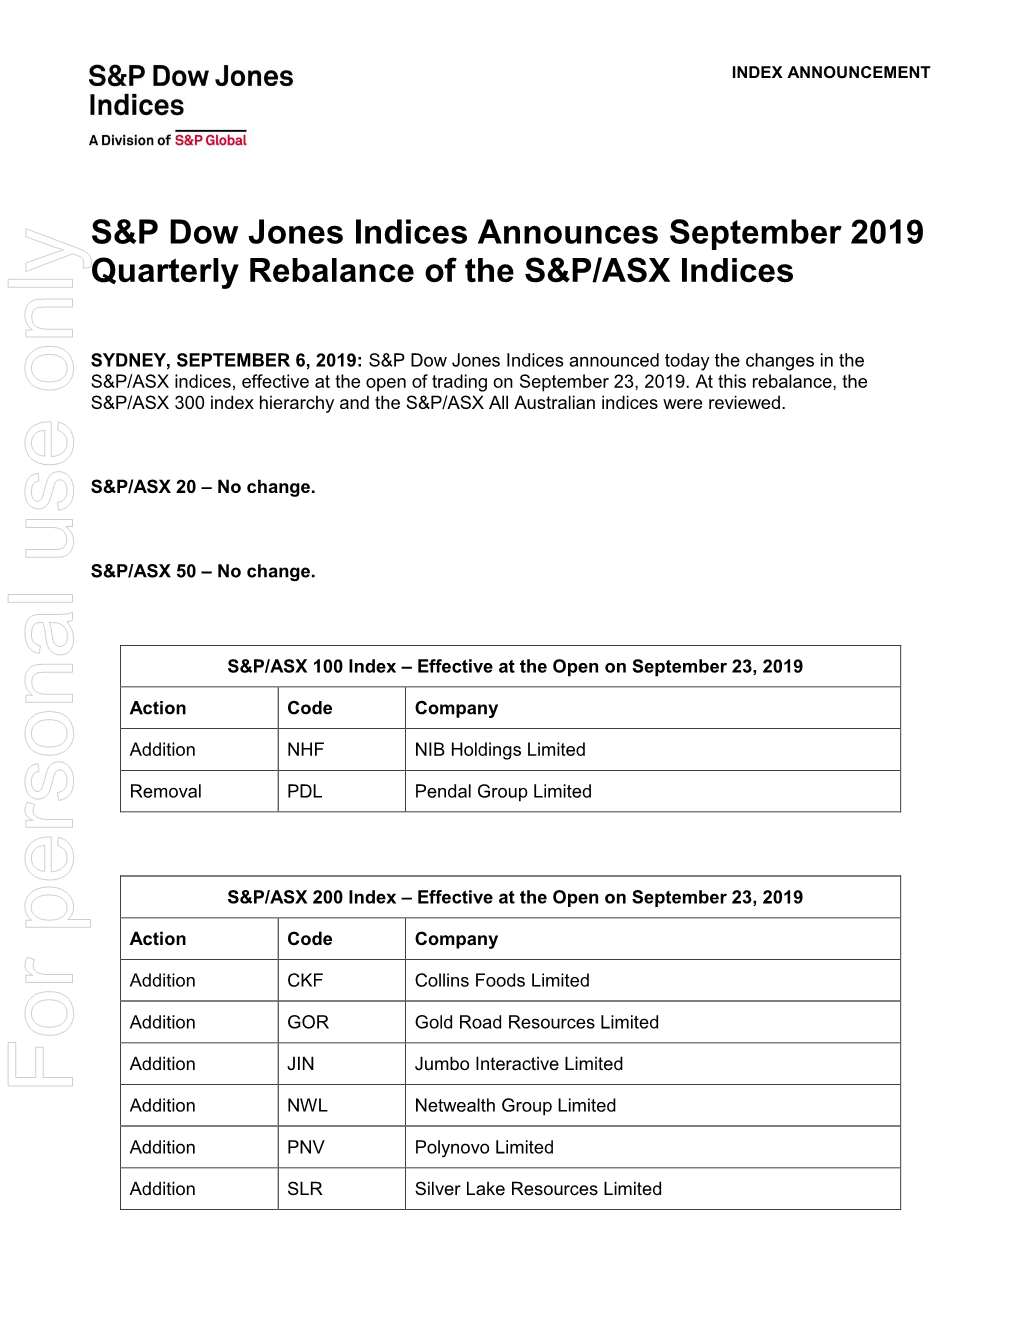 S&P Dow Jones Indices Announcement September 2019 Quarterly Rebalance